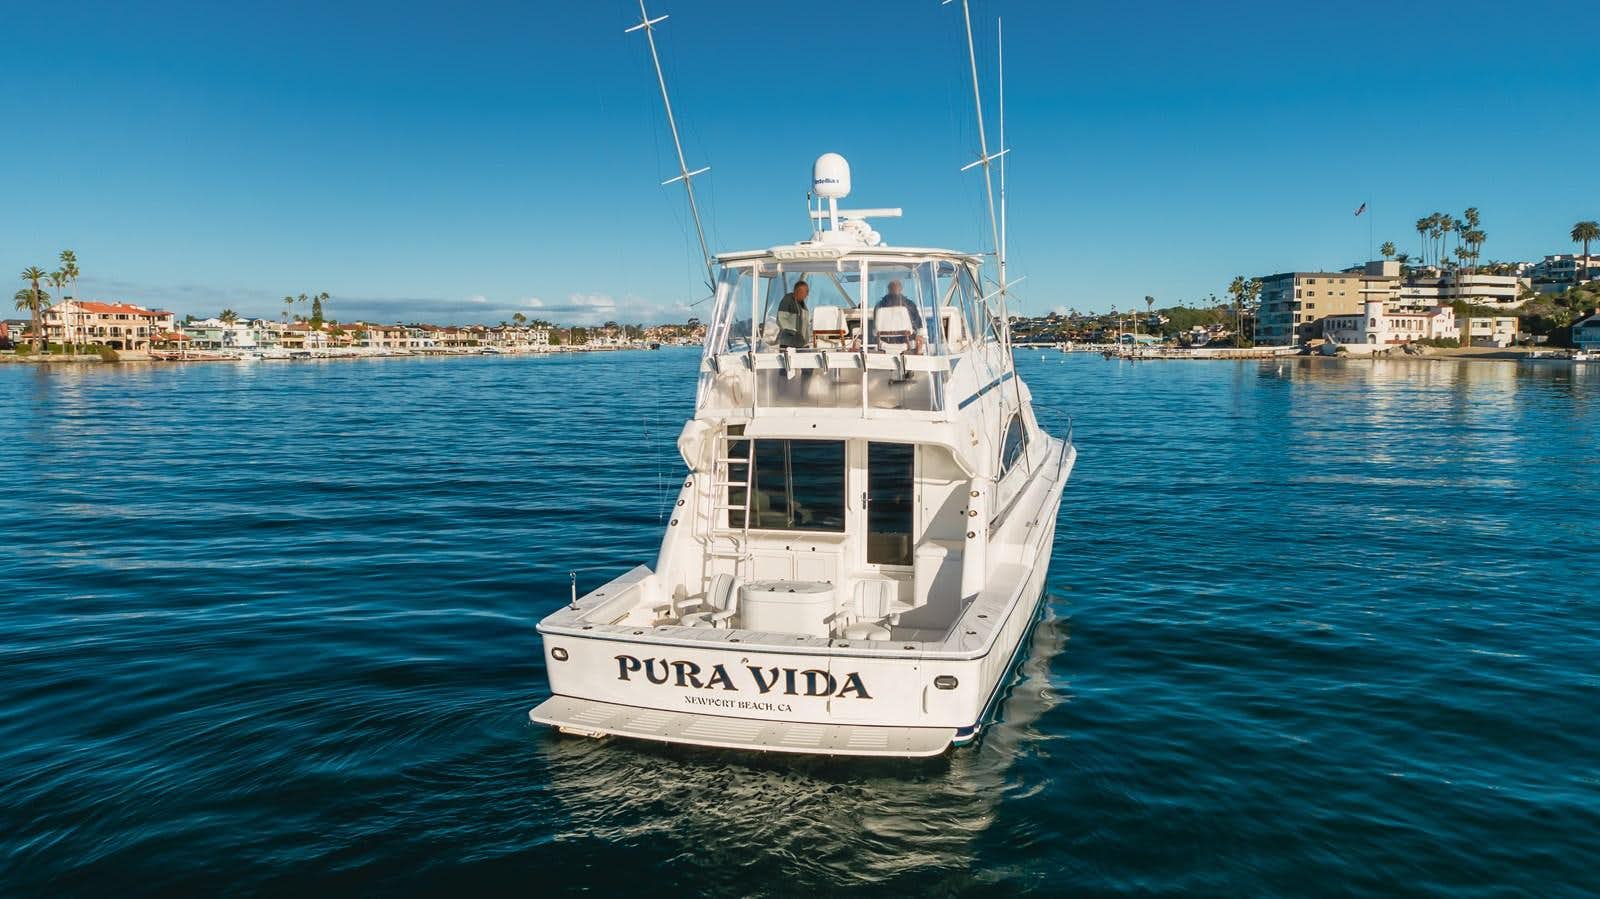 Pura vida
Yacht for Sale